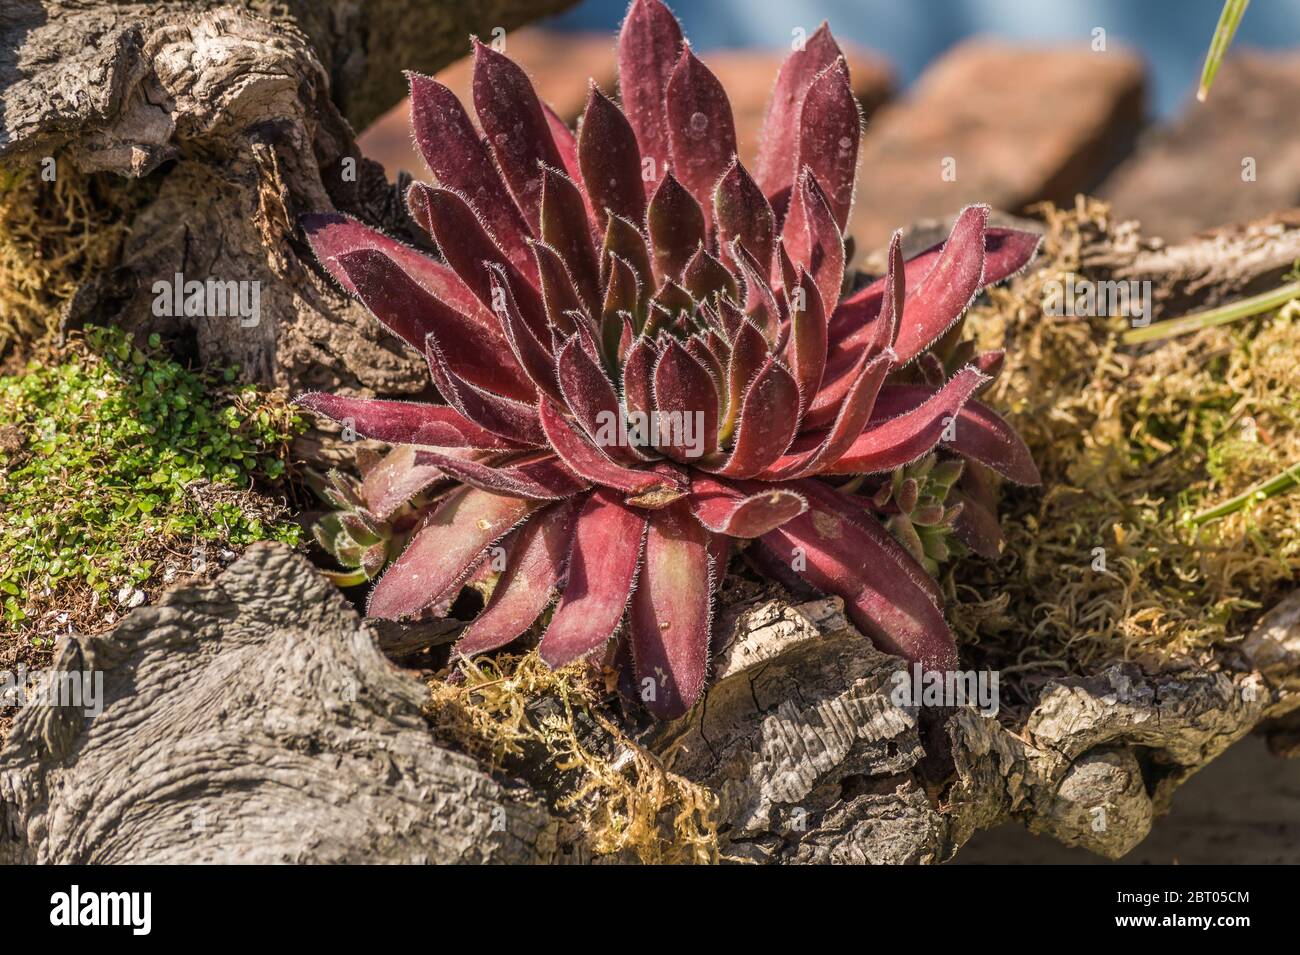 Colorful red sempervivum houseleek succulent plants in a stone garden. Close up. Stock Photo